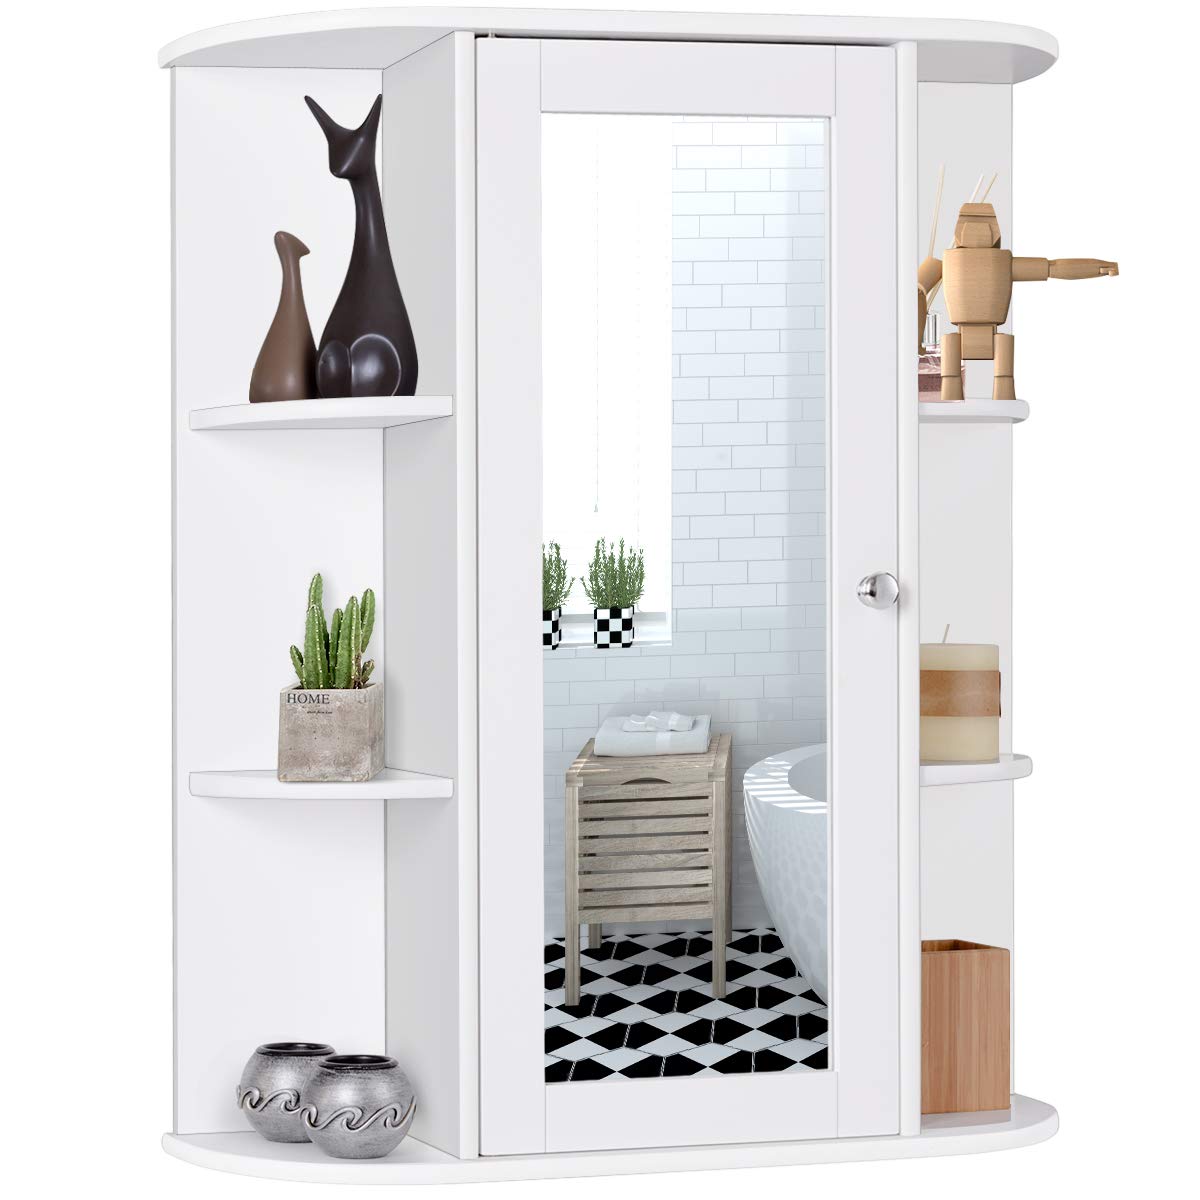 Bathroom Storage Cabinet with Door, Wall Mounted Bathroom Storage